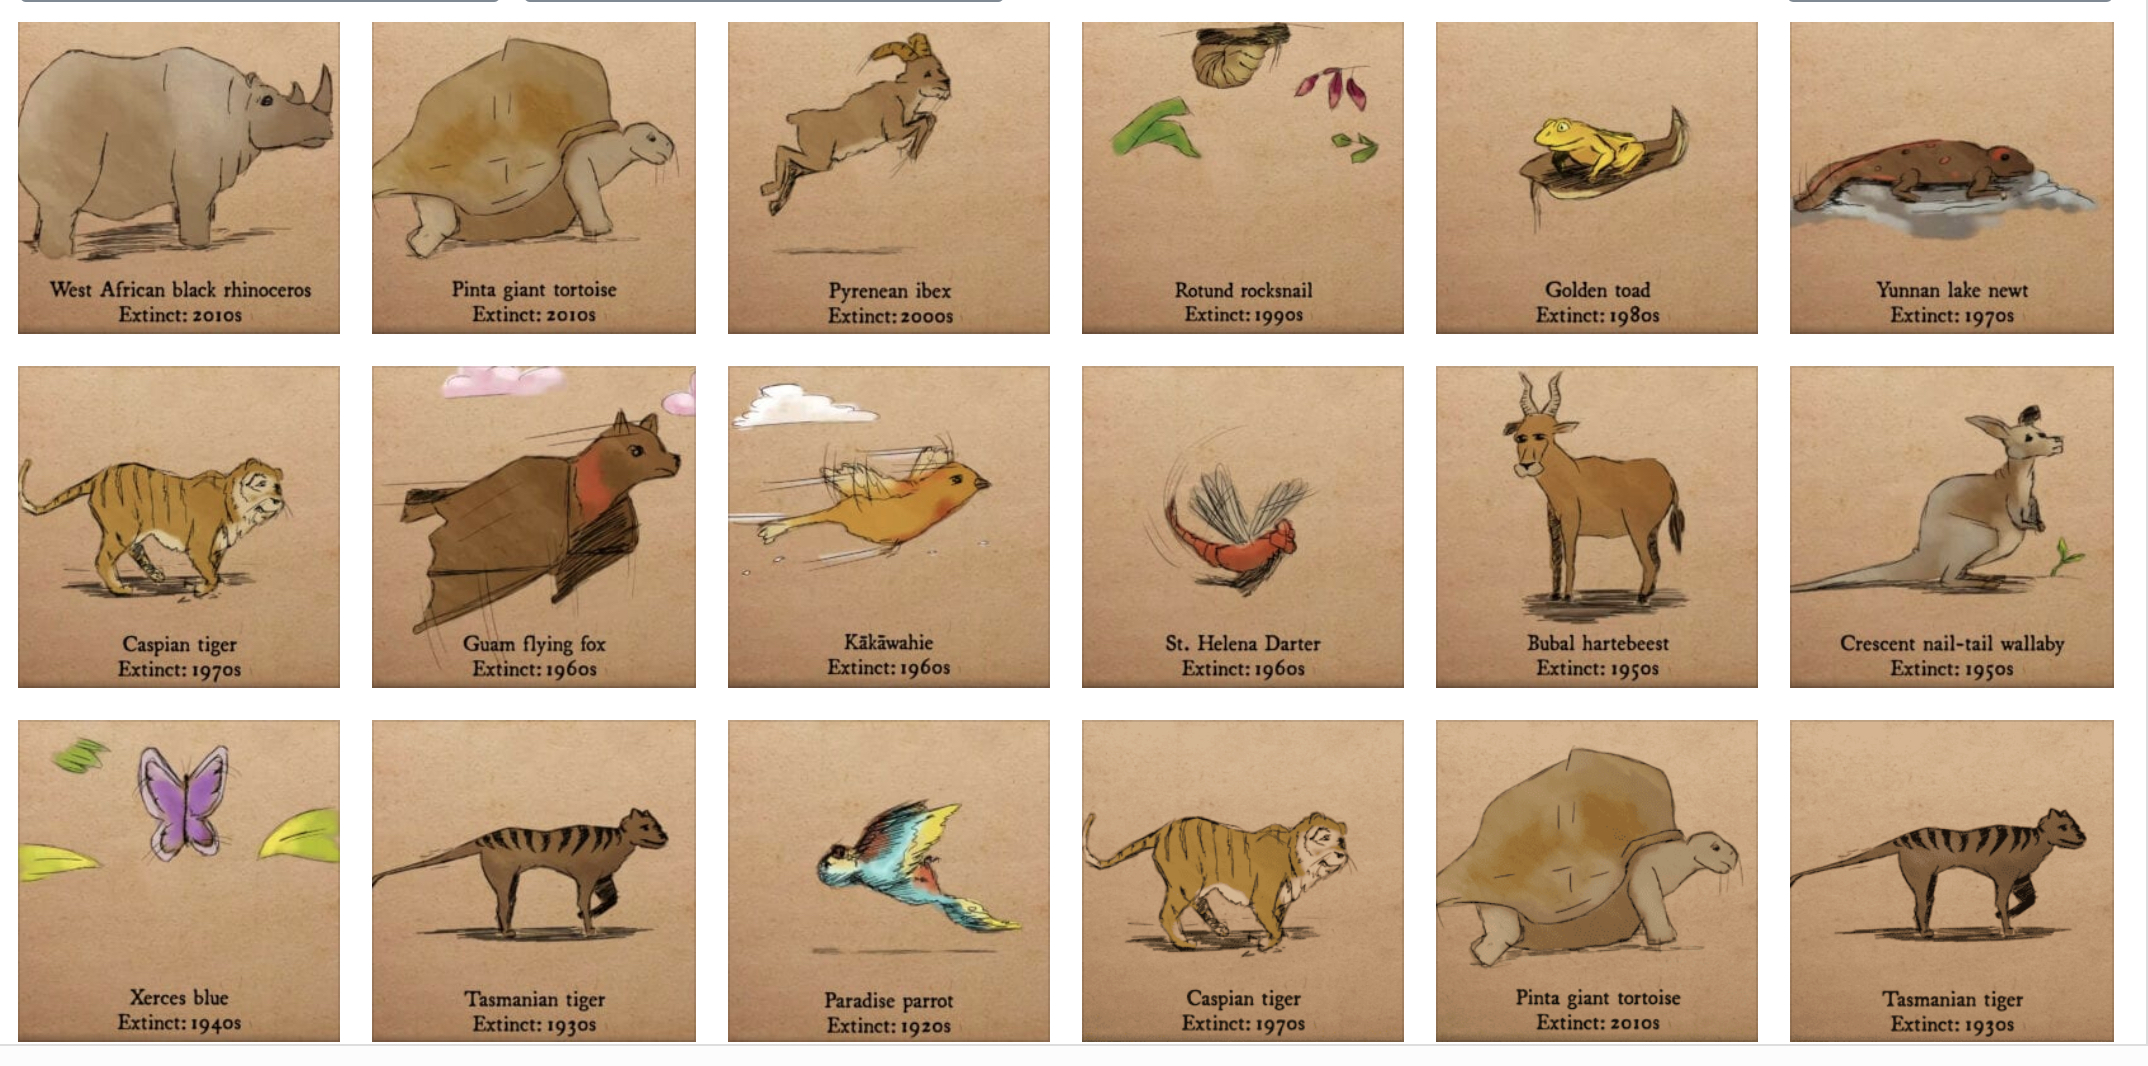 18 animals that went extinct in the last century | Greenpeace UK